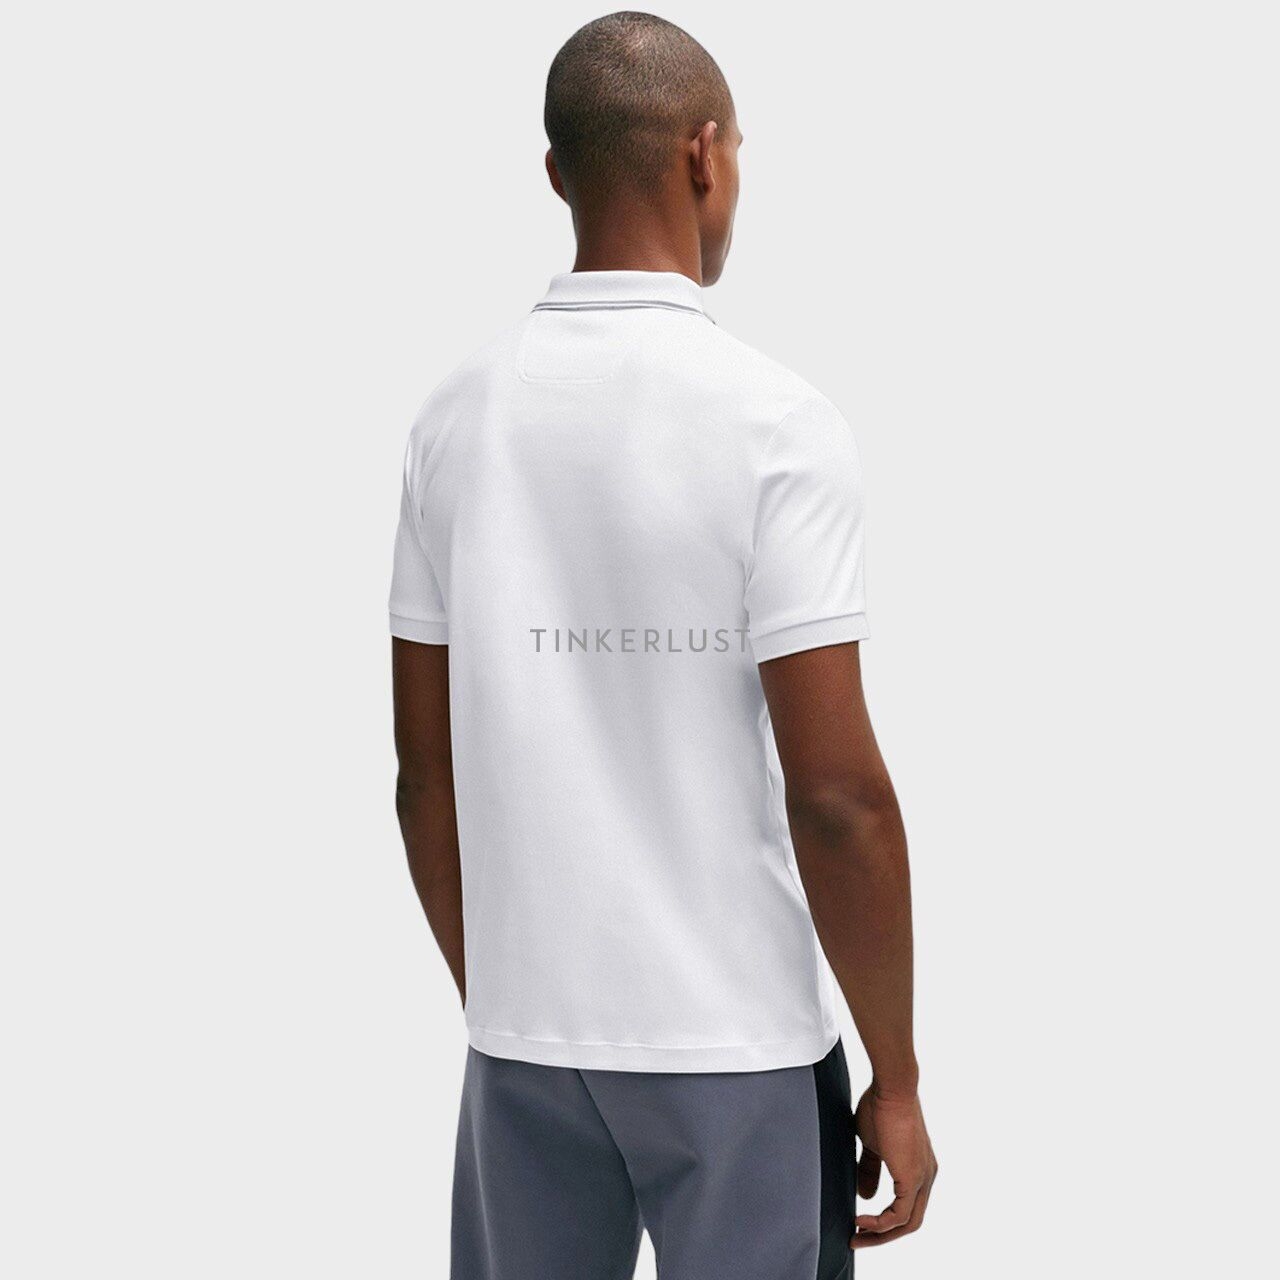 Hugo Boss Men Interlock Slim-Fit Polo Shirt in White with Collar Graphics